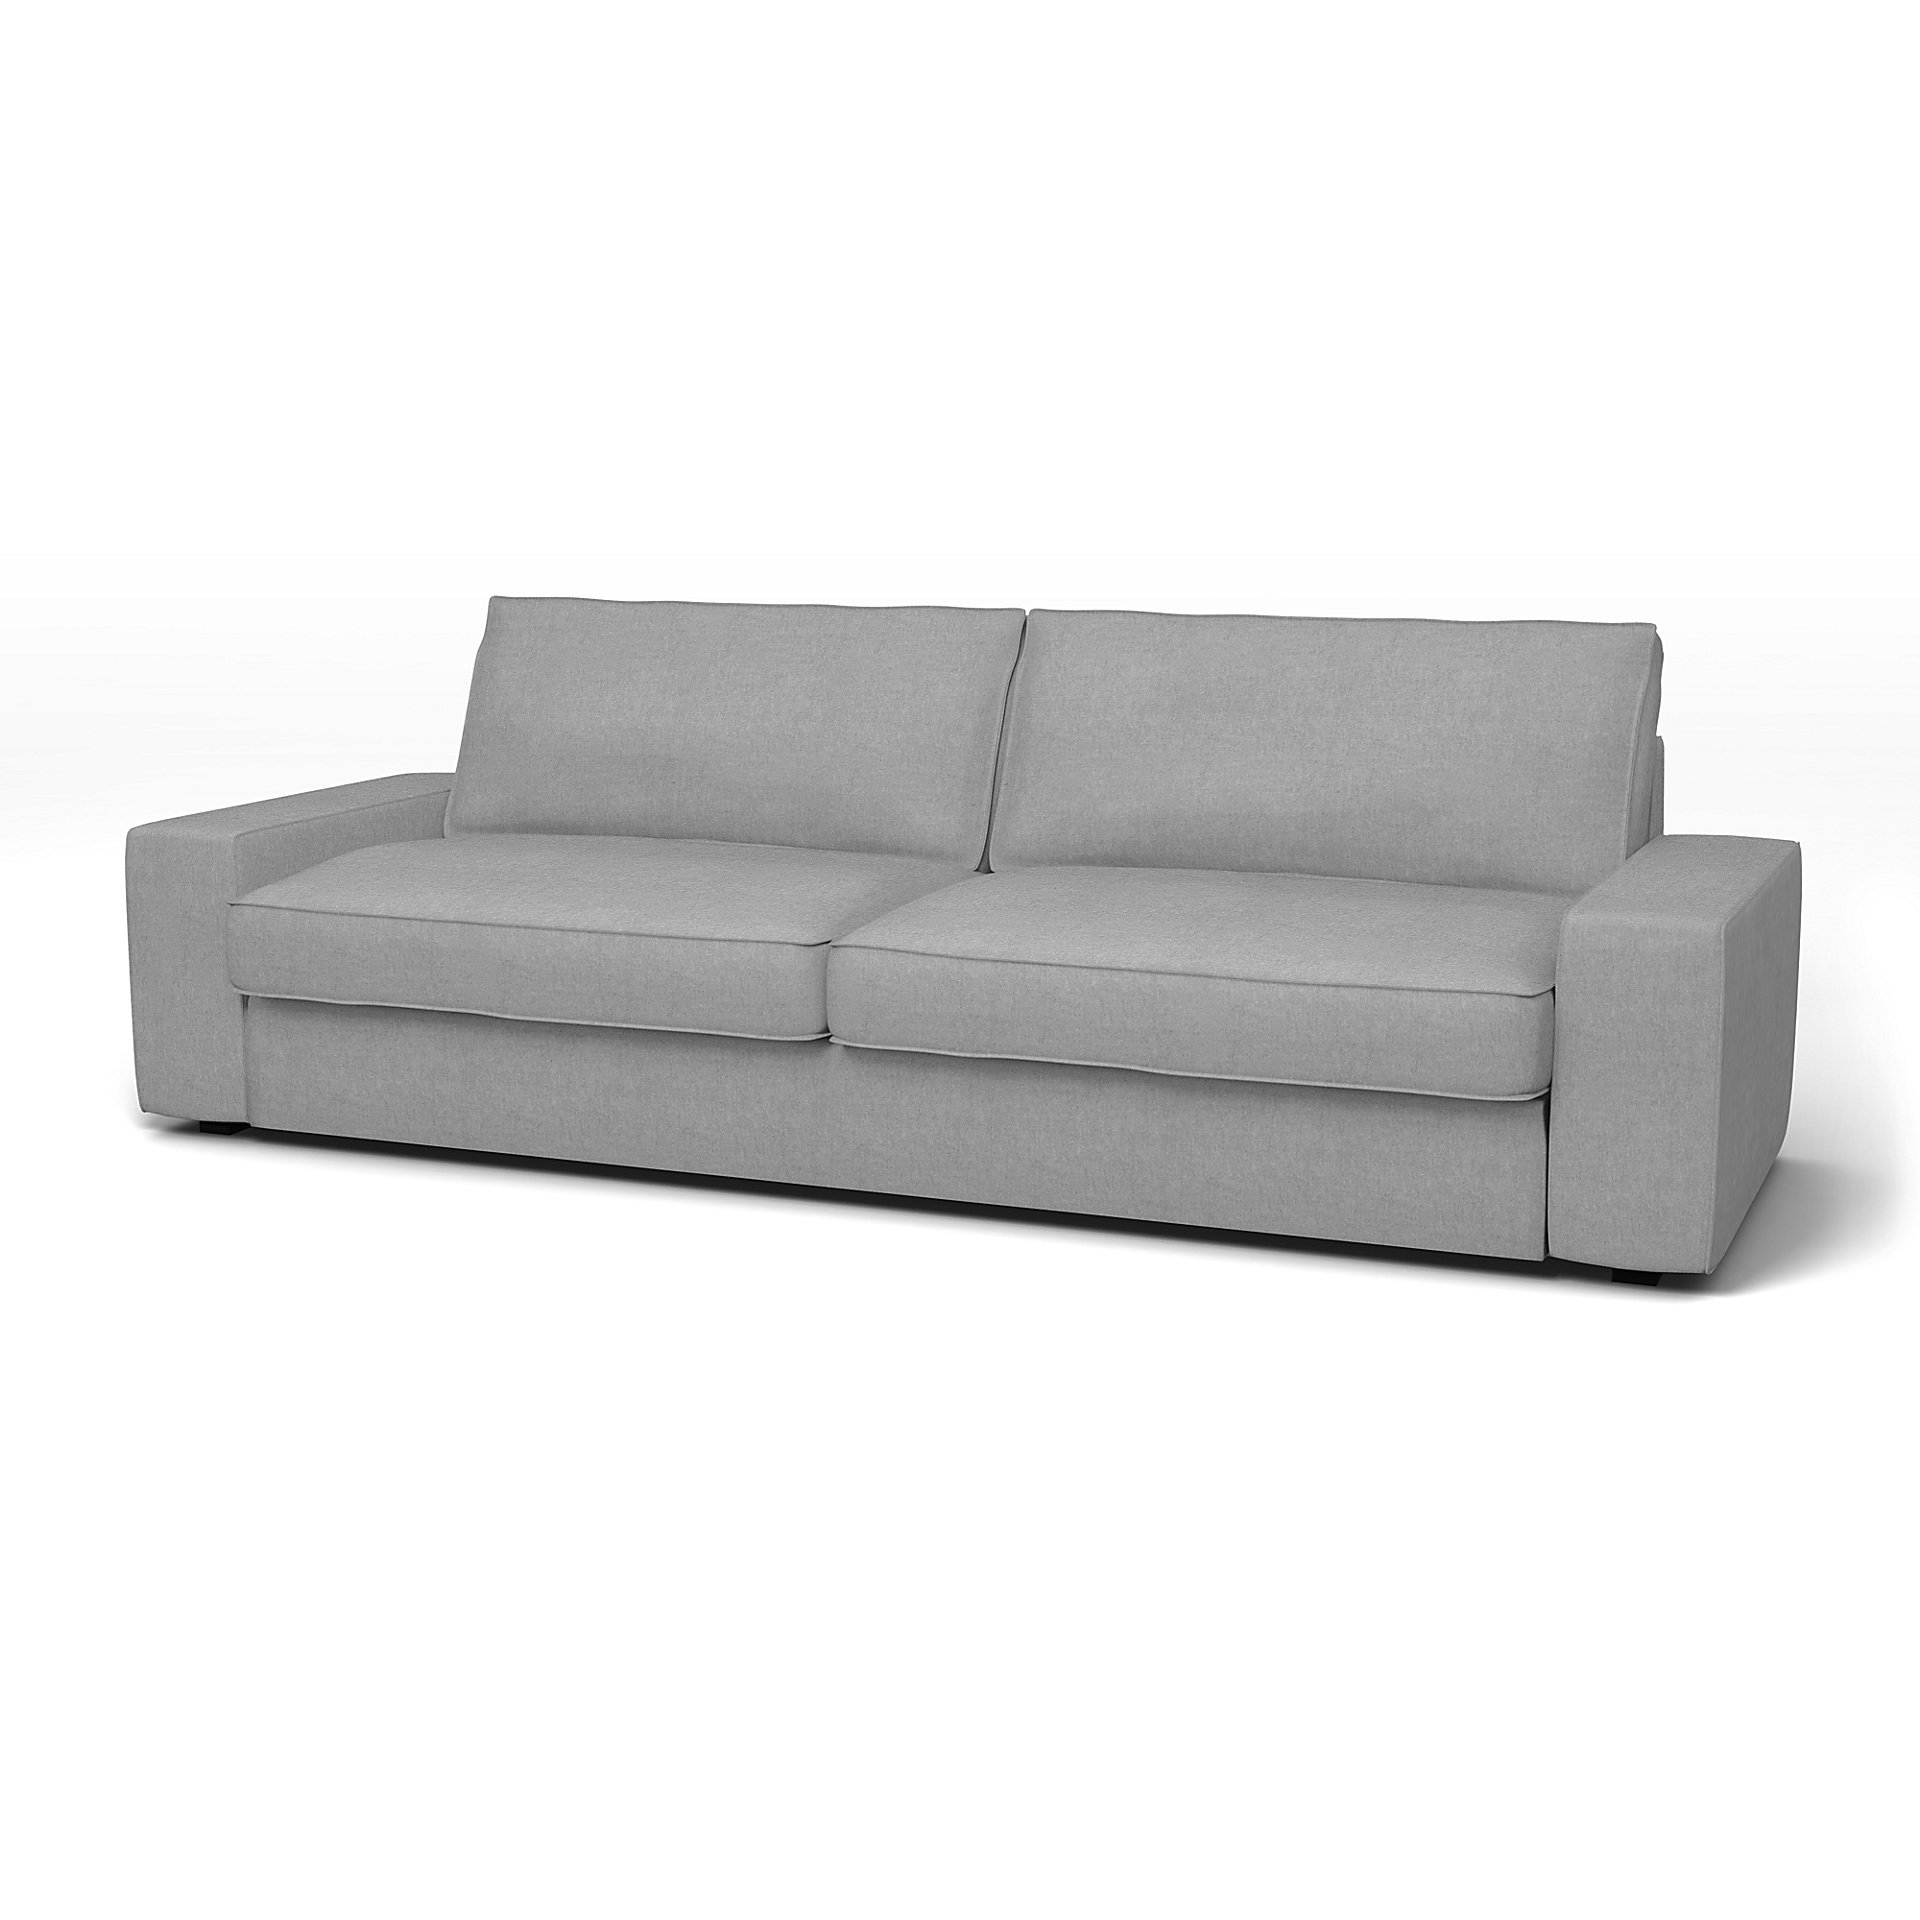 IKEA - Kivik Sofa Bed Cover, Graphite, Linen - Bemz